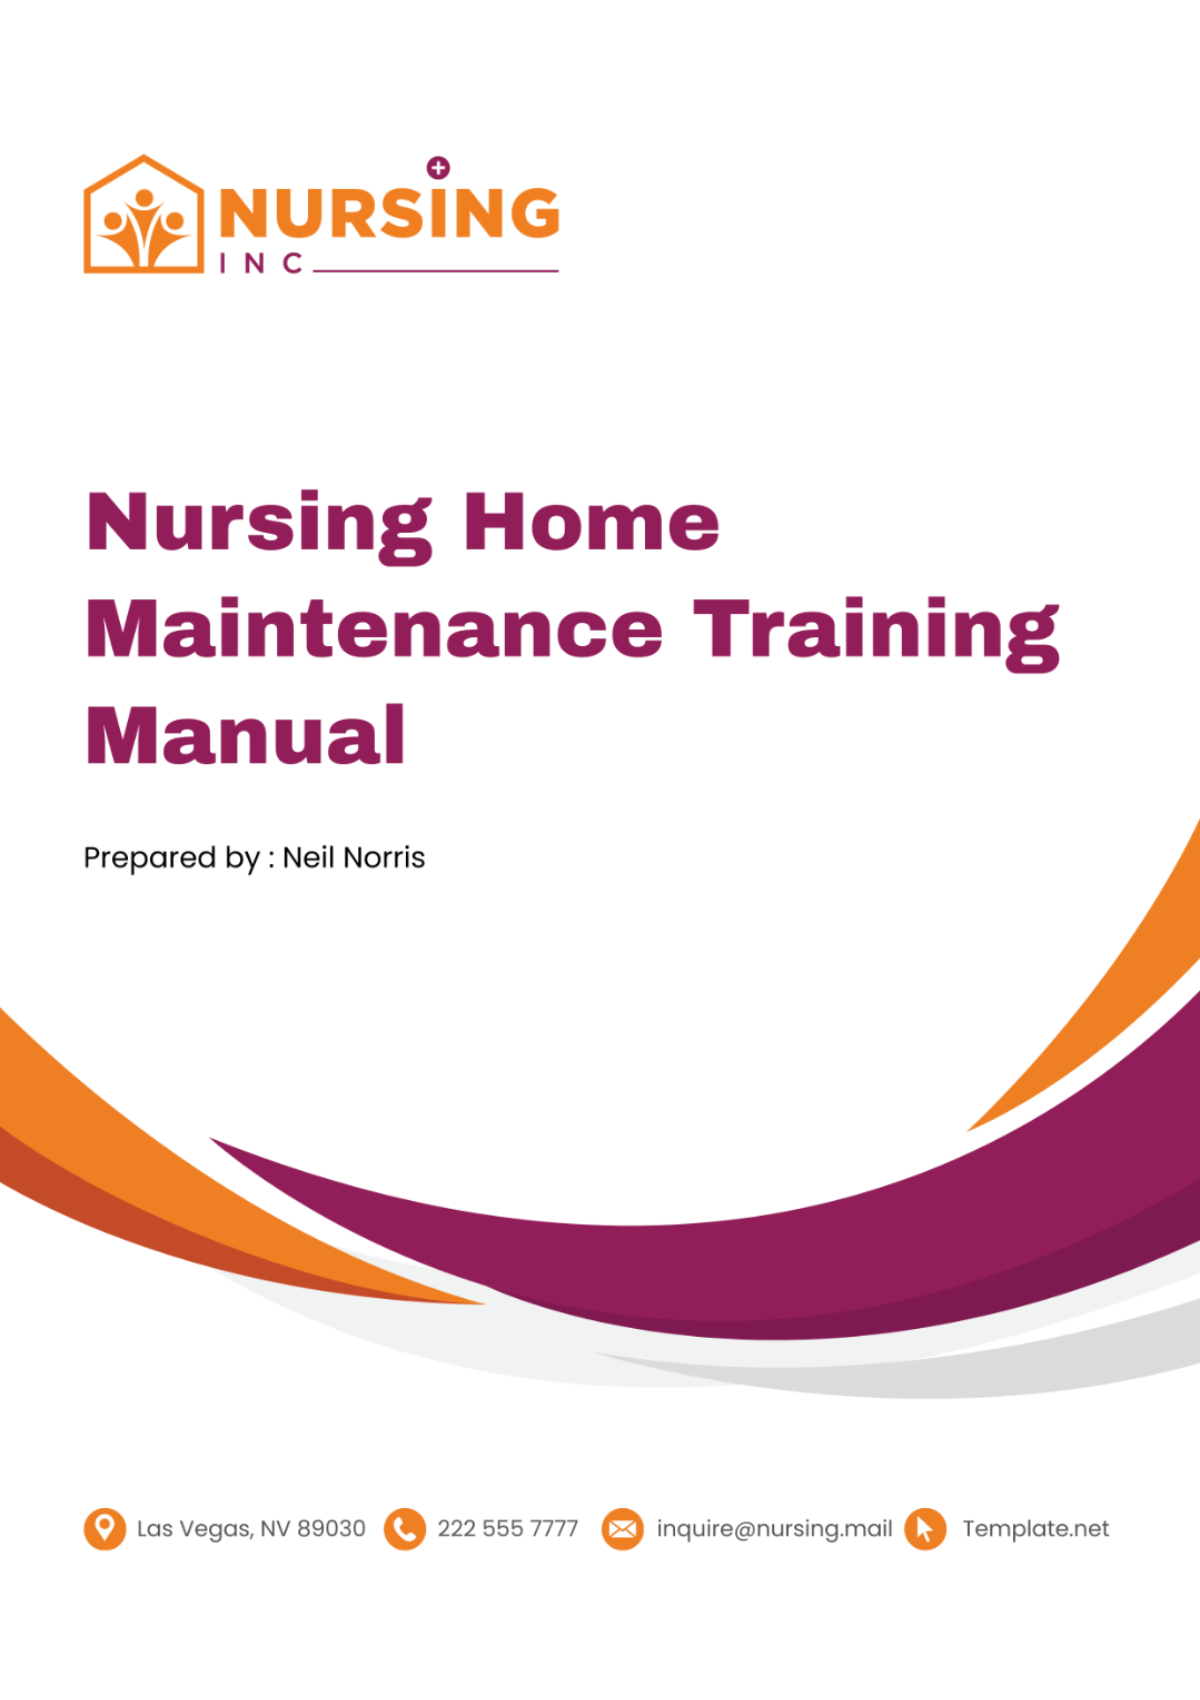 Nursing Home Maintenance Training Manual Template